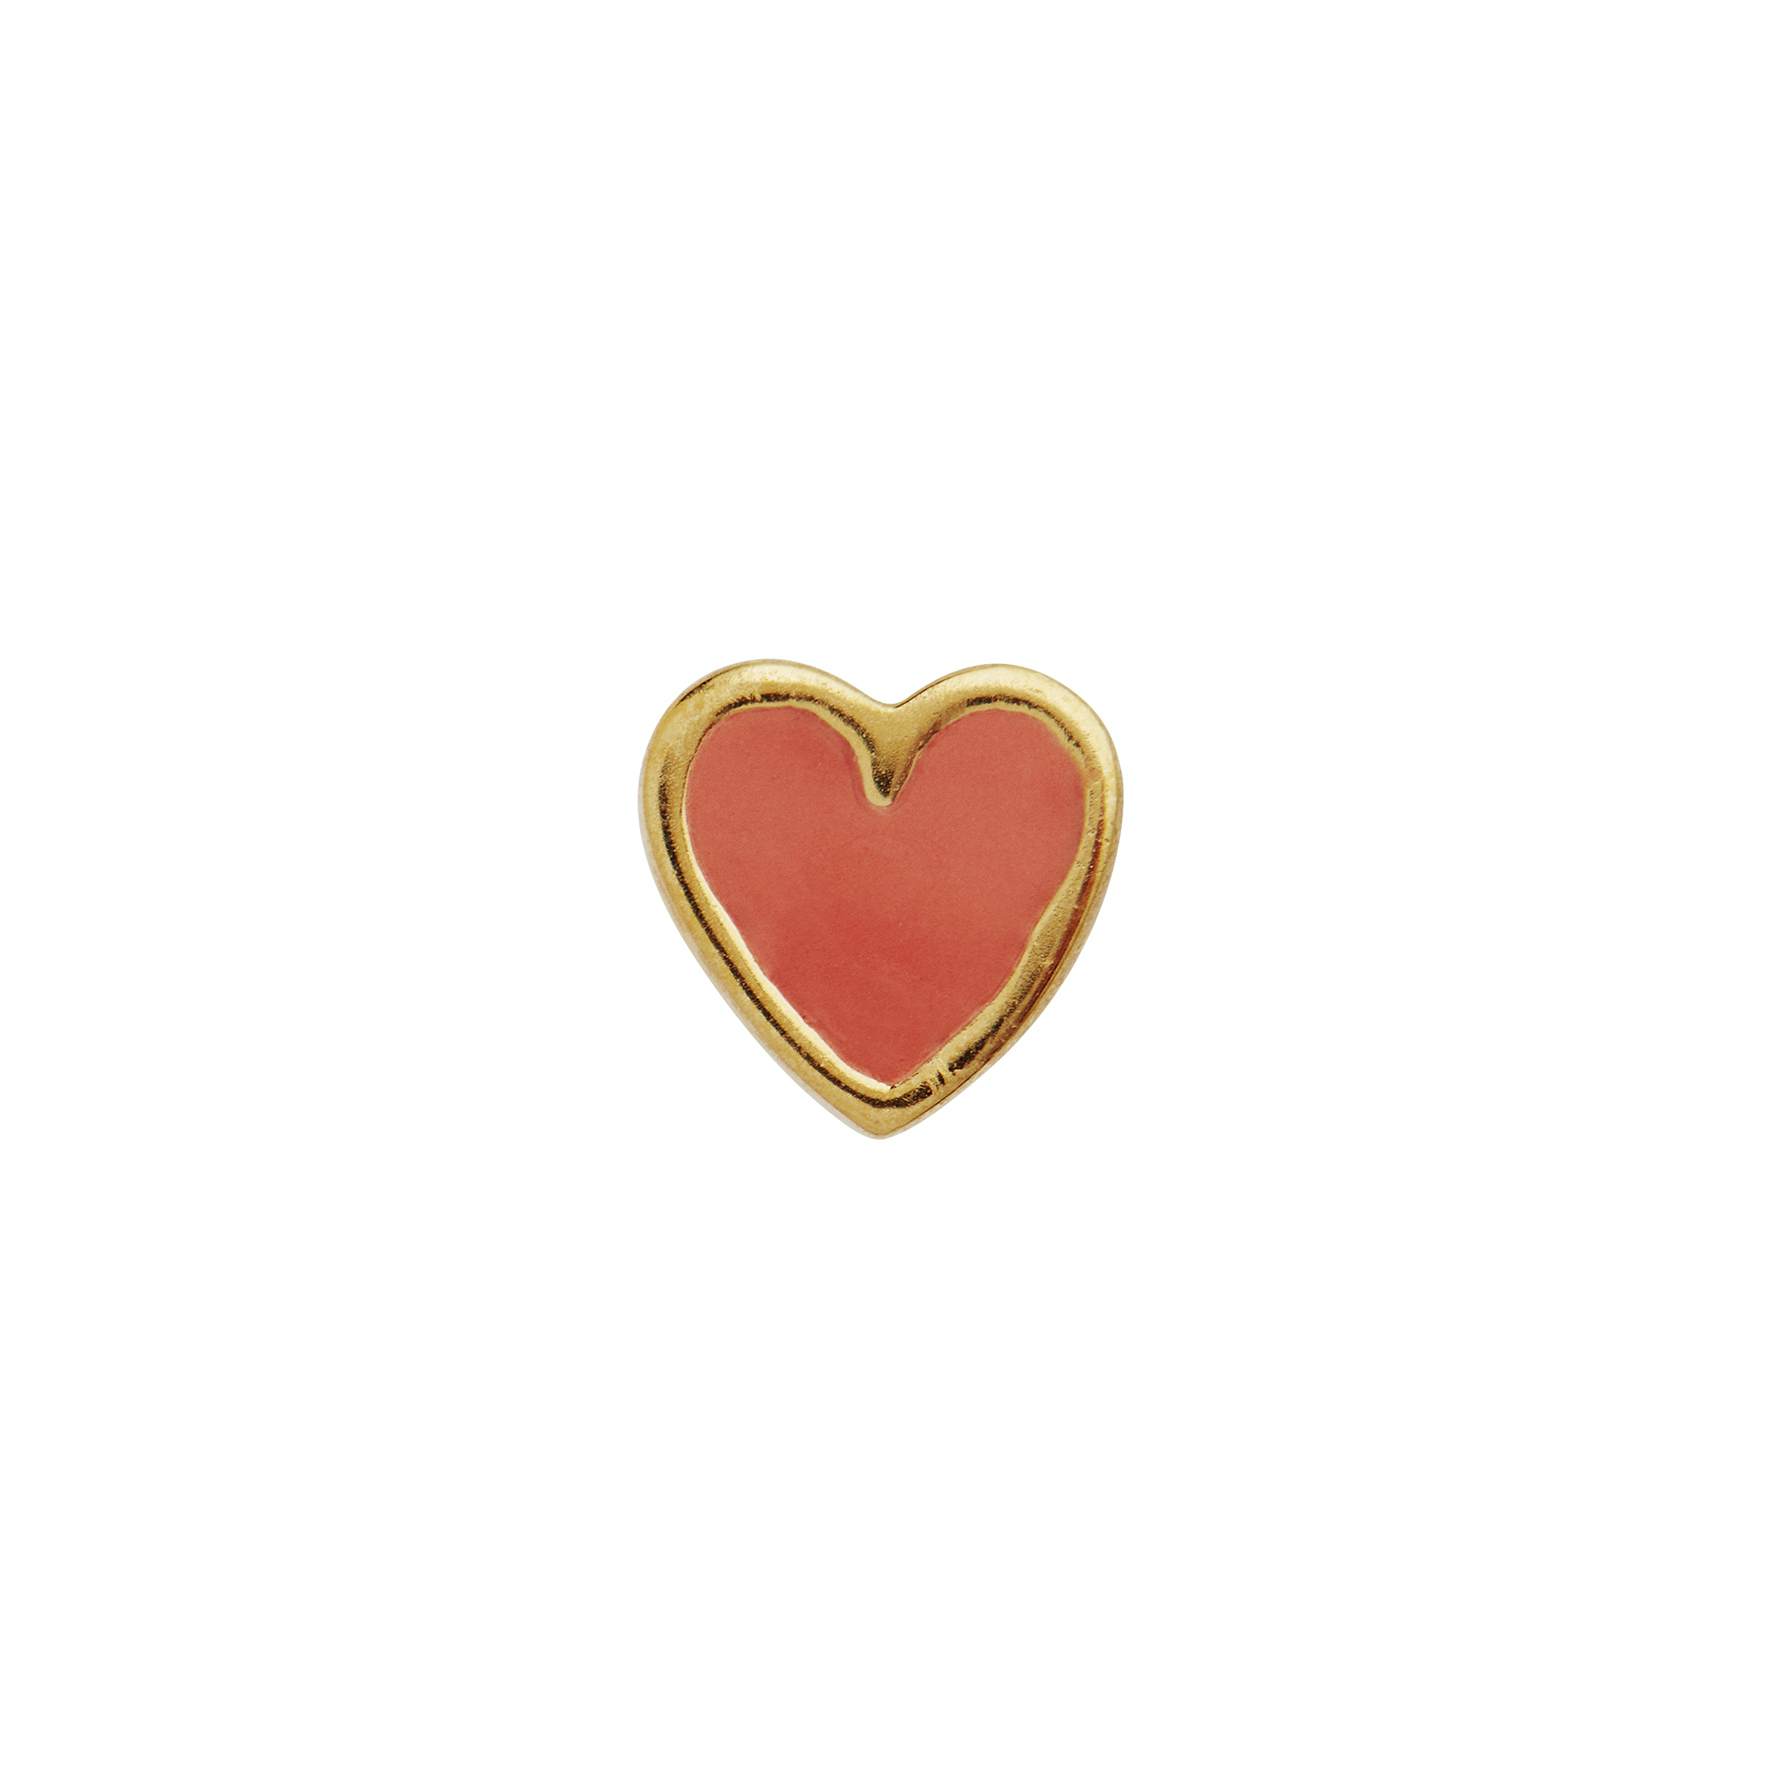 Petit Love Heart Coral von STINE A Jewelry in Vergoldet-Silber Sterling 925